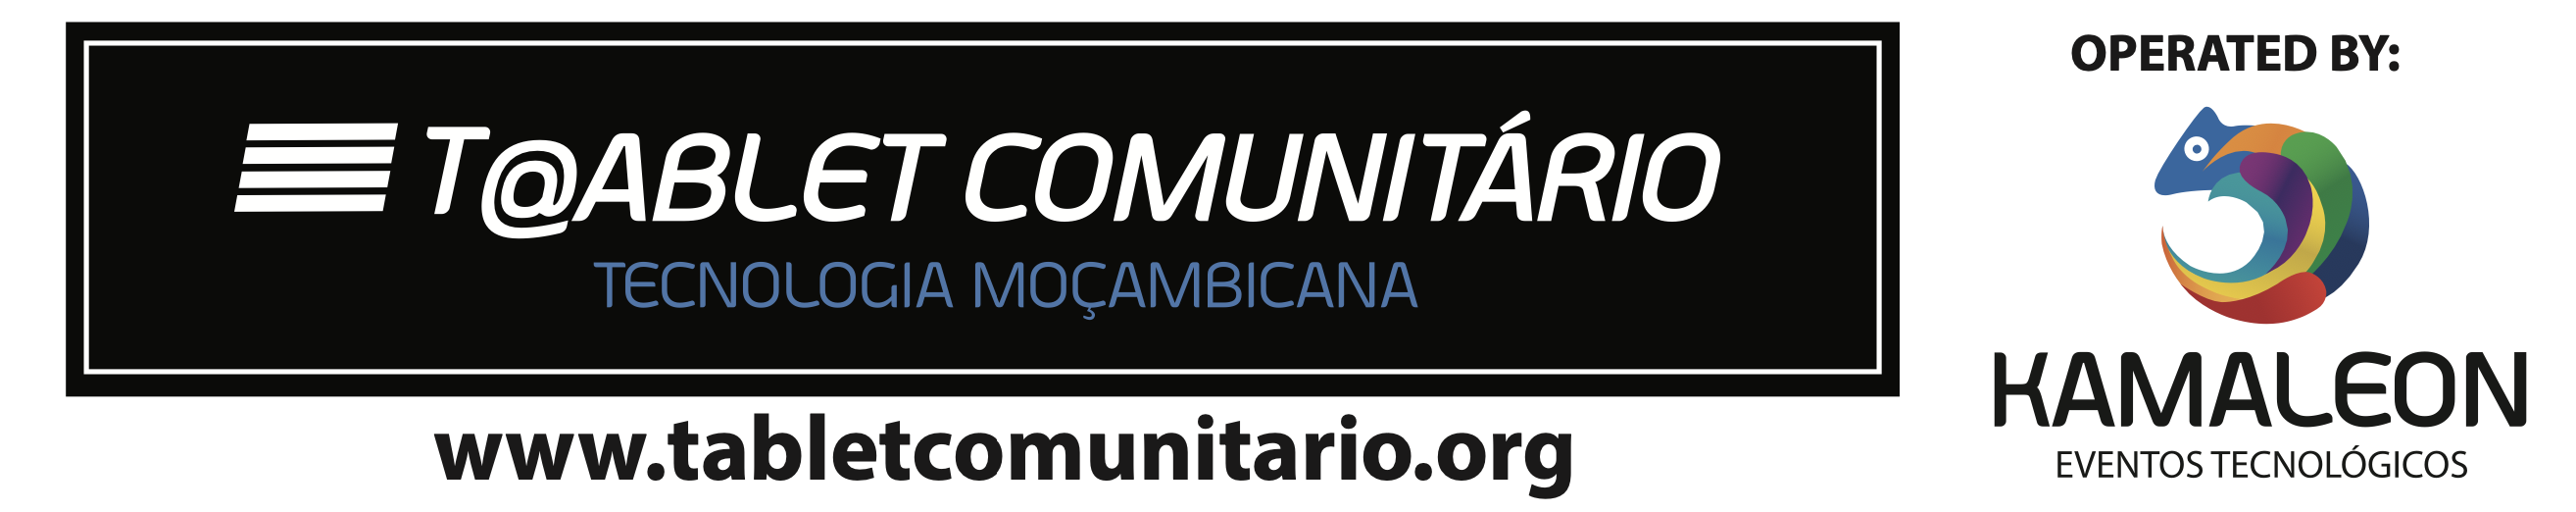 Logo Tablet comunitario